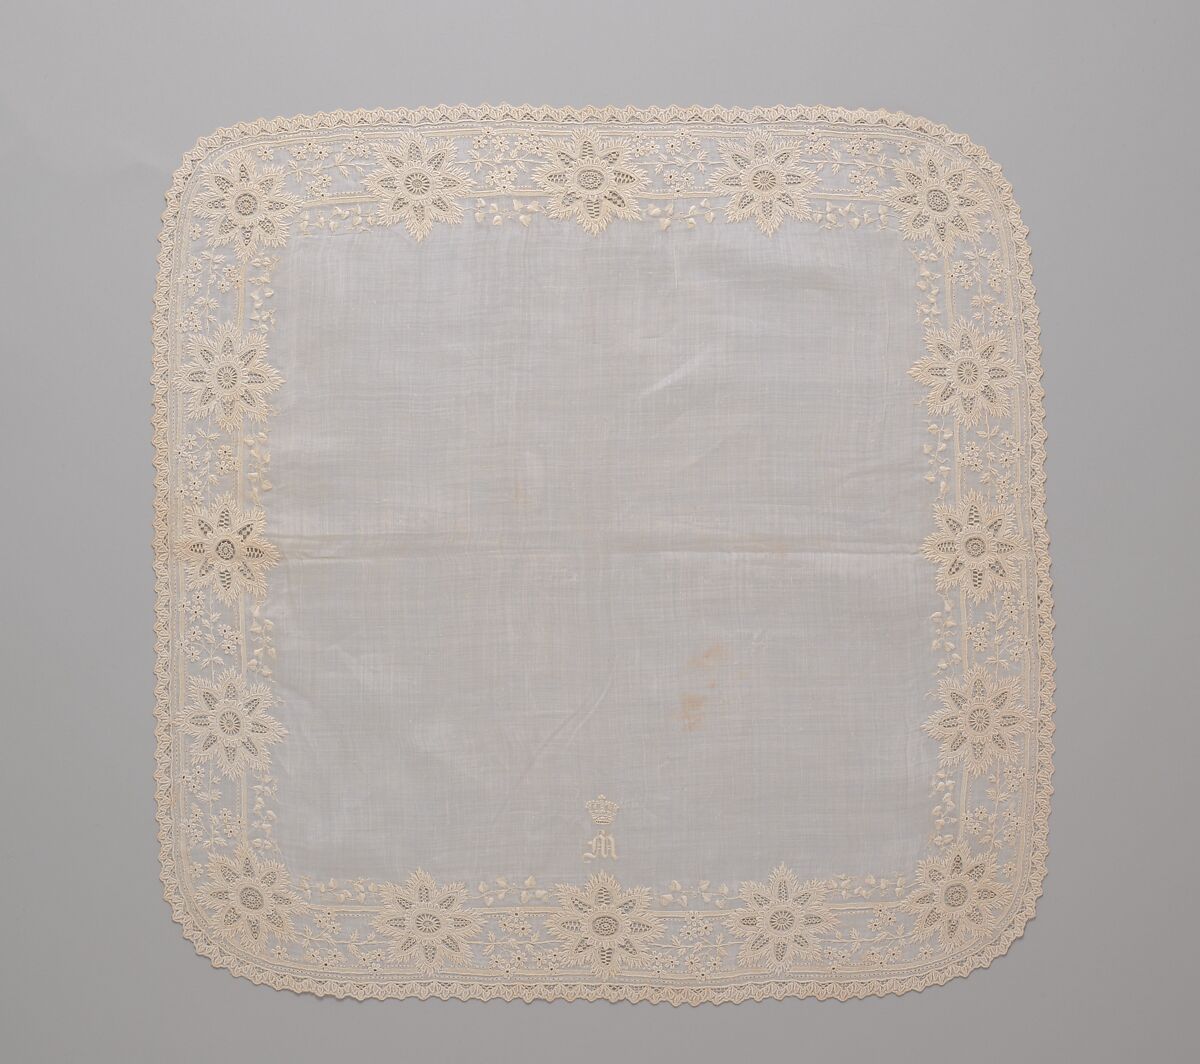 Handkerchief, silk on linen, French or Swiss 